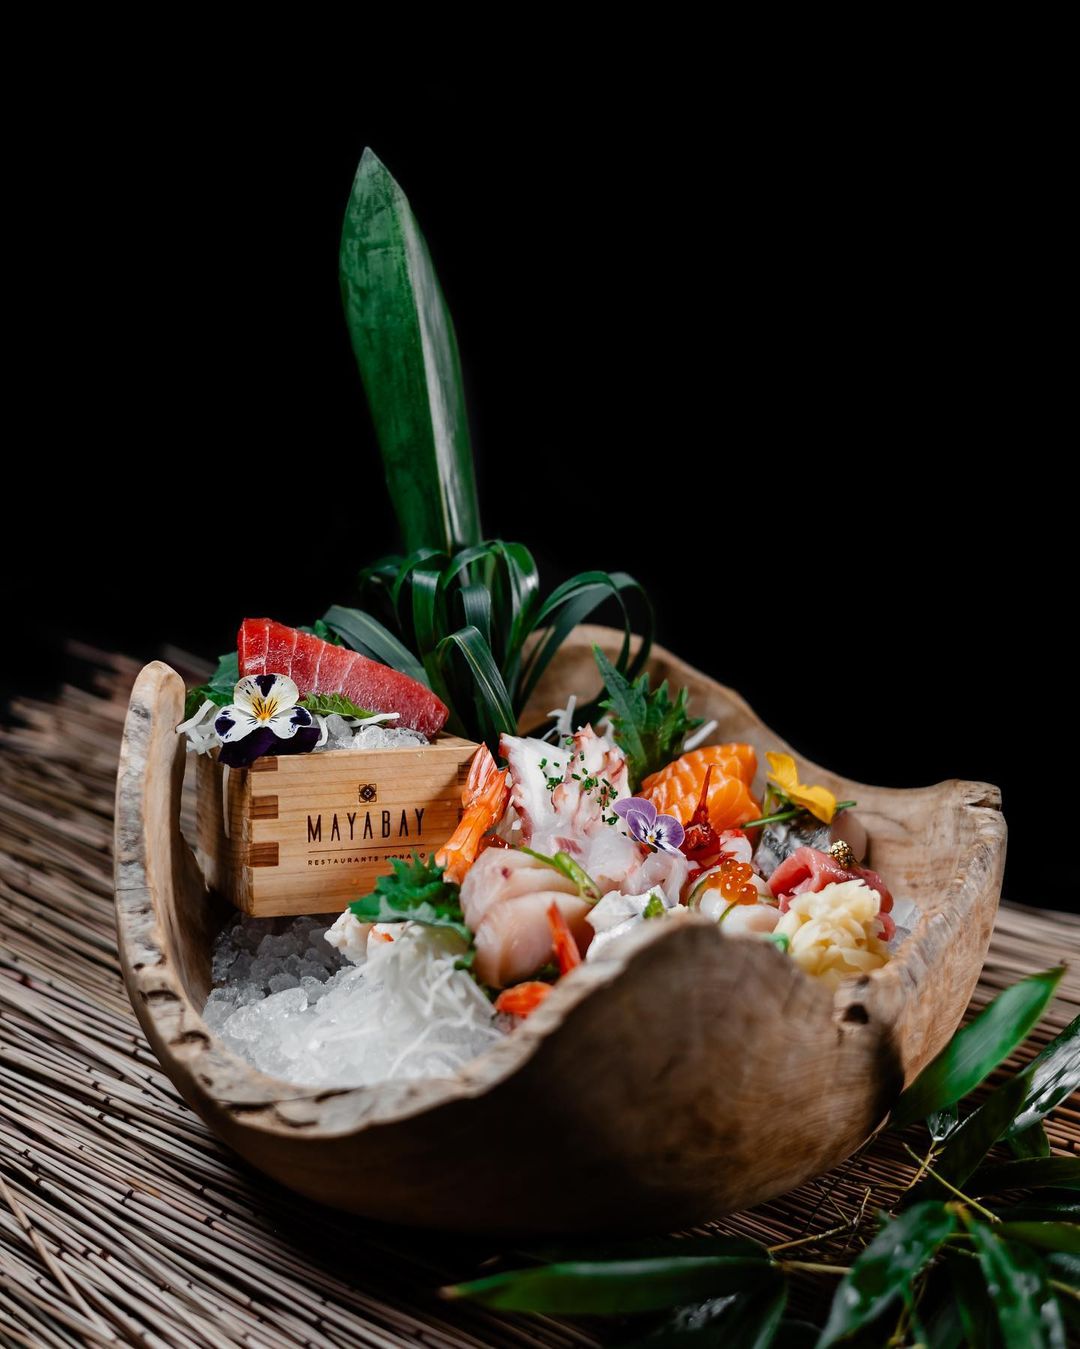 The perfect Sushi Platterat Maya Bay